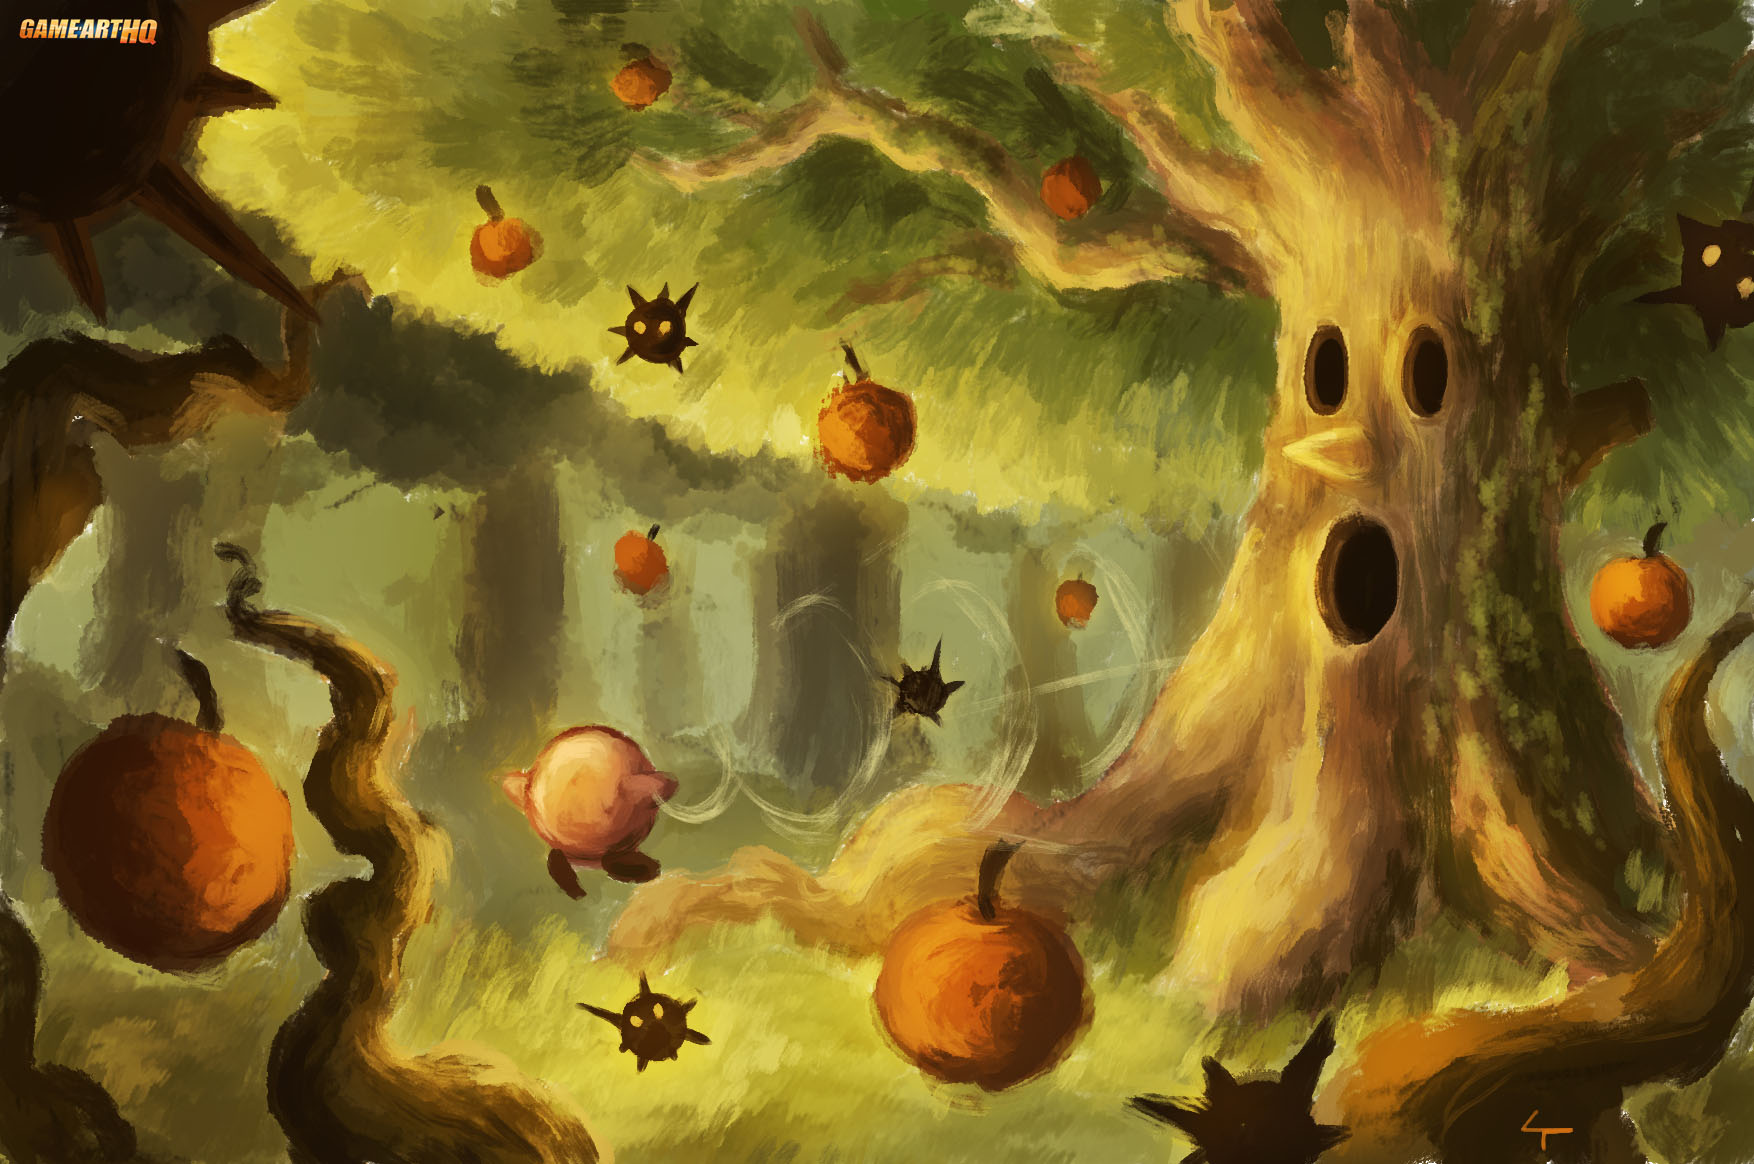 Whispy Woods Kirby's Dreamland Villains Art Challenge on Game Art HQ